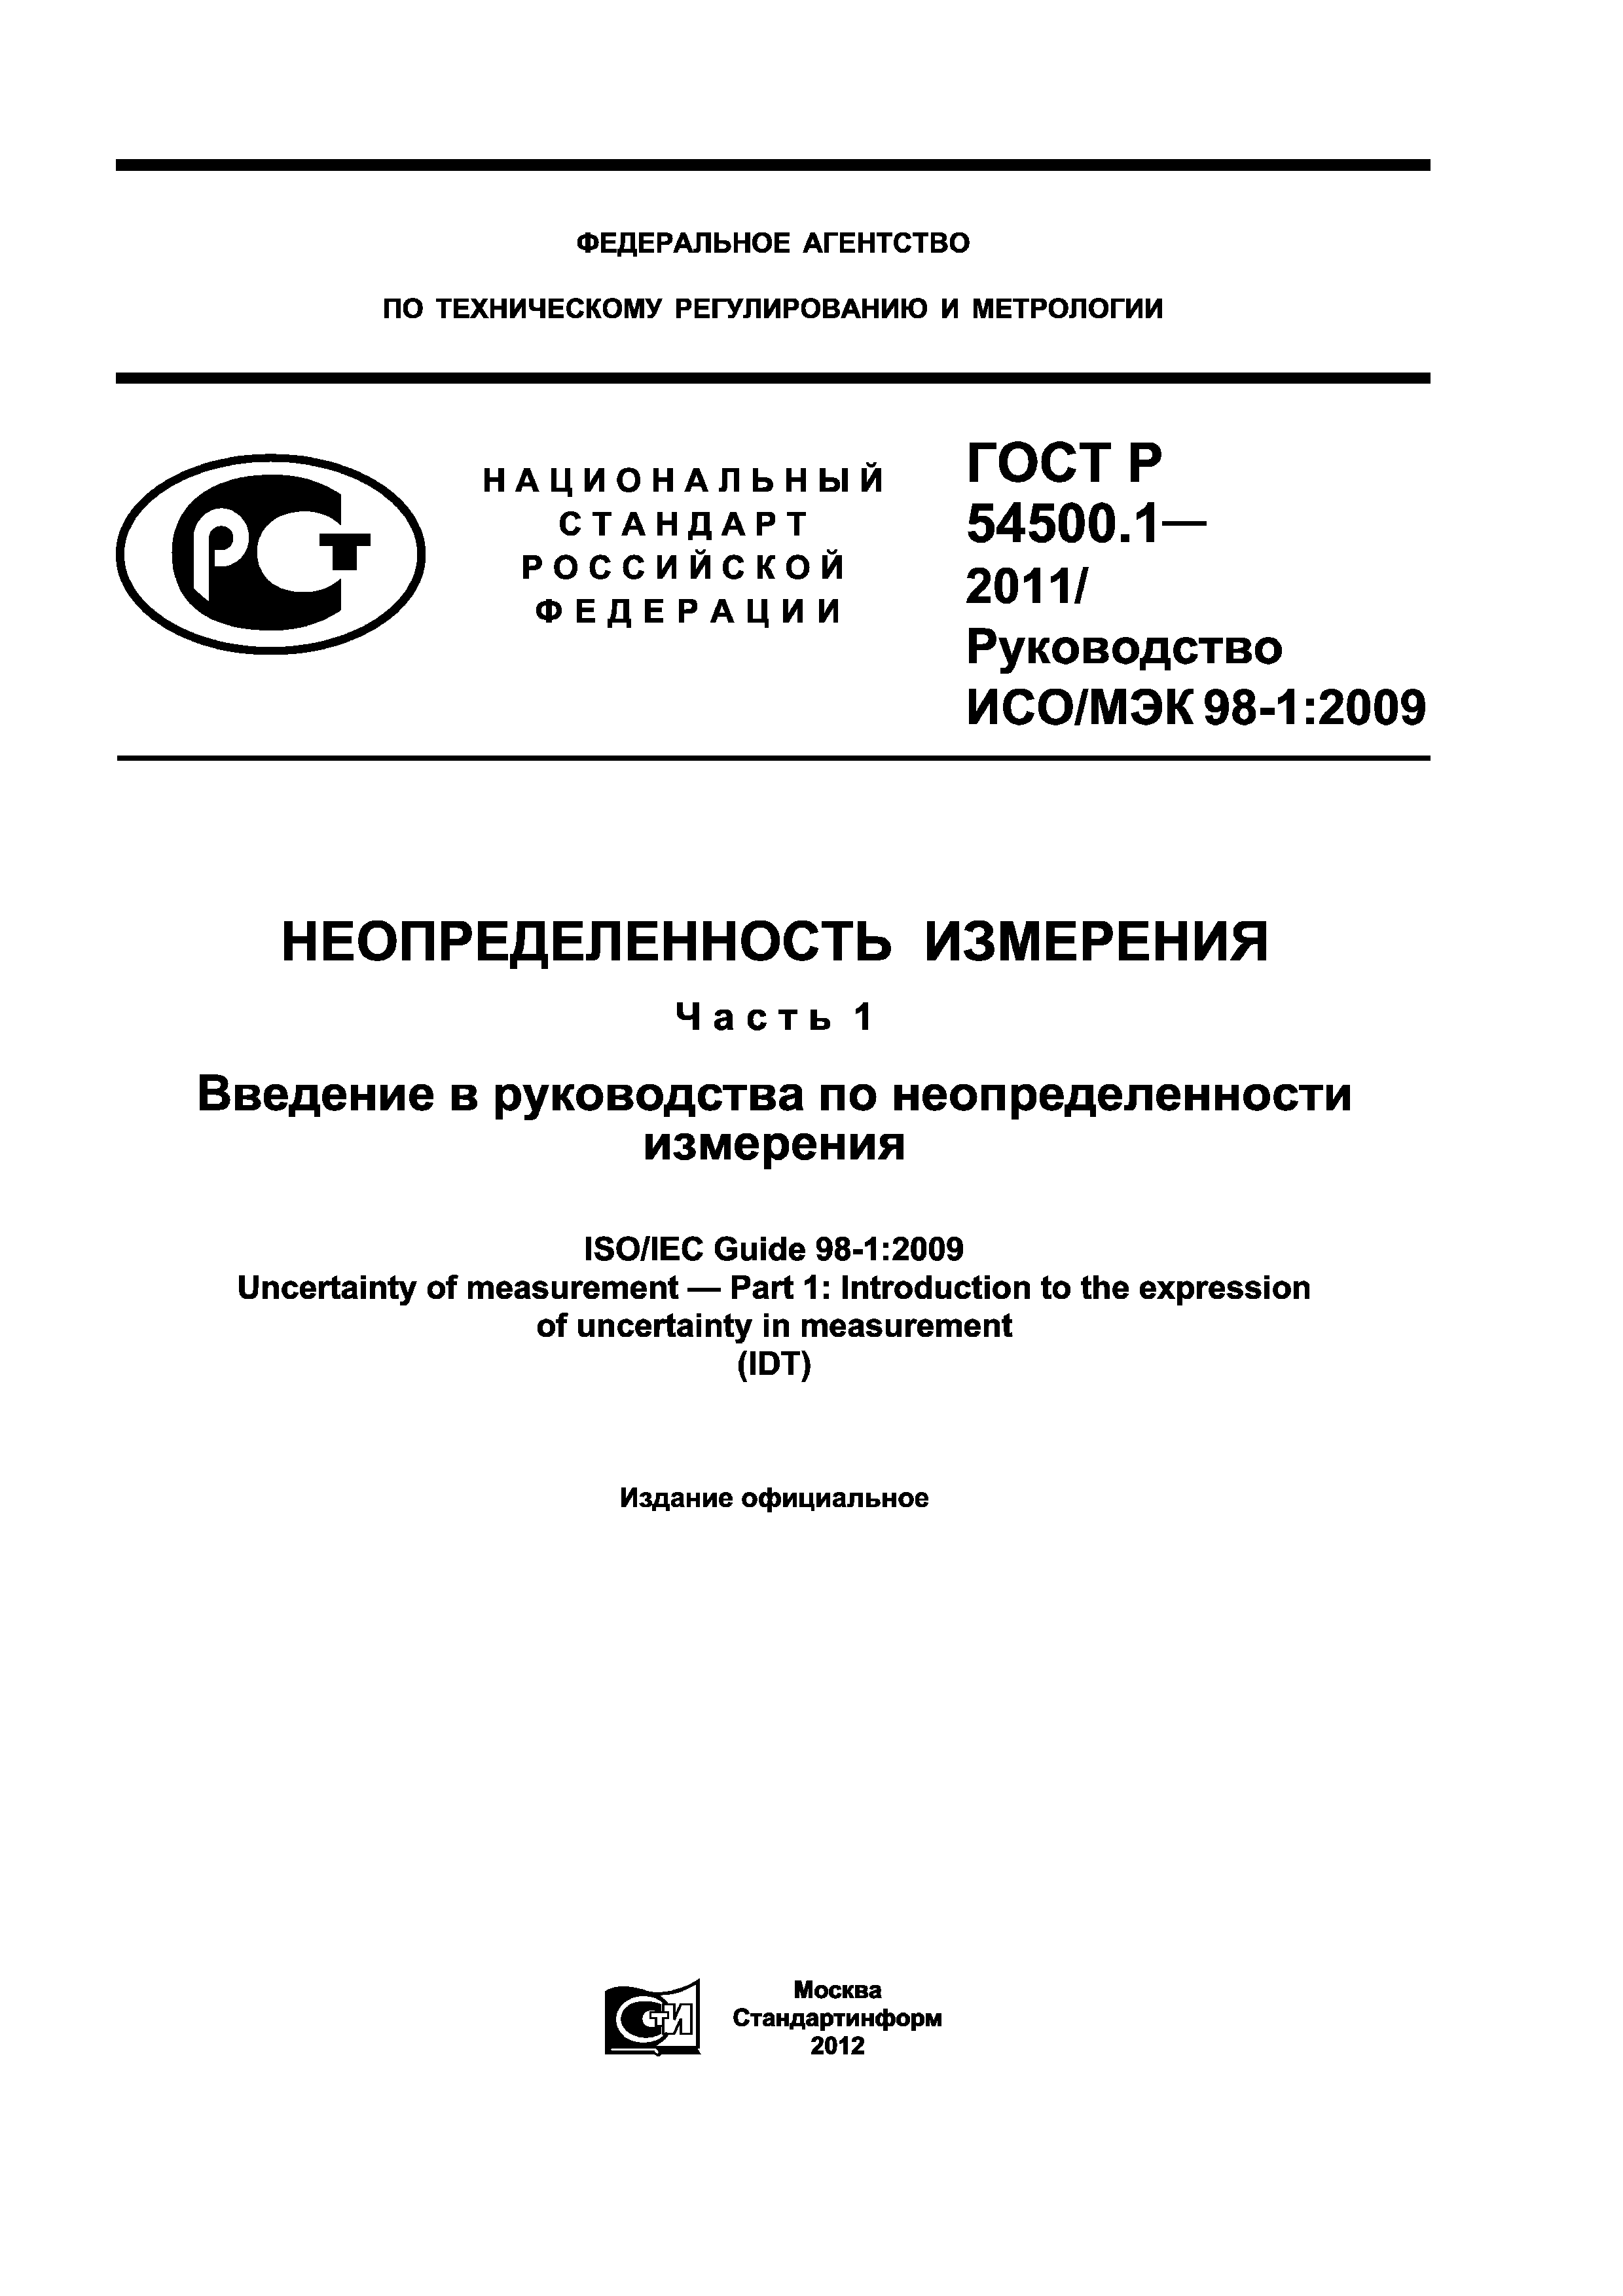 ГОСТ Р 54500.1-2011